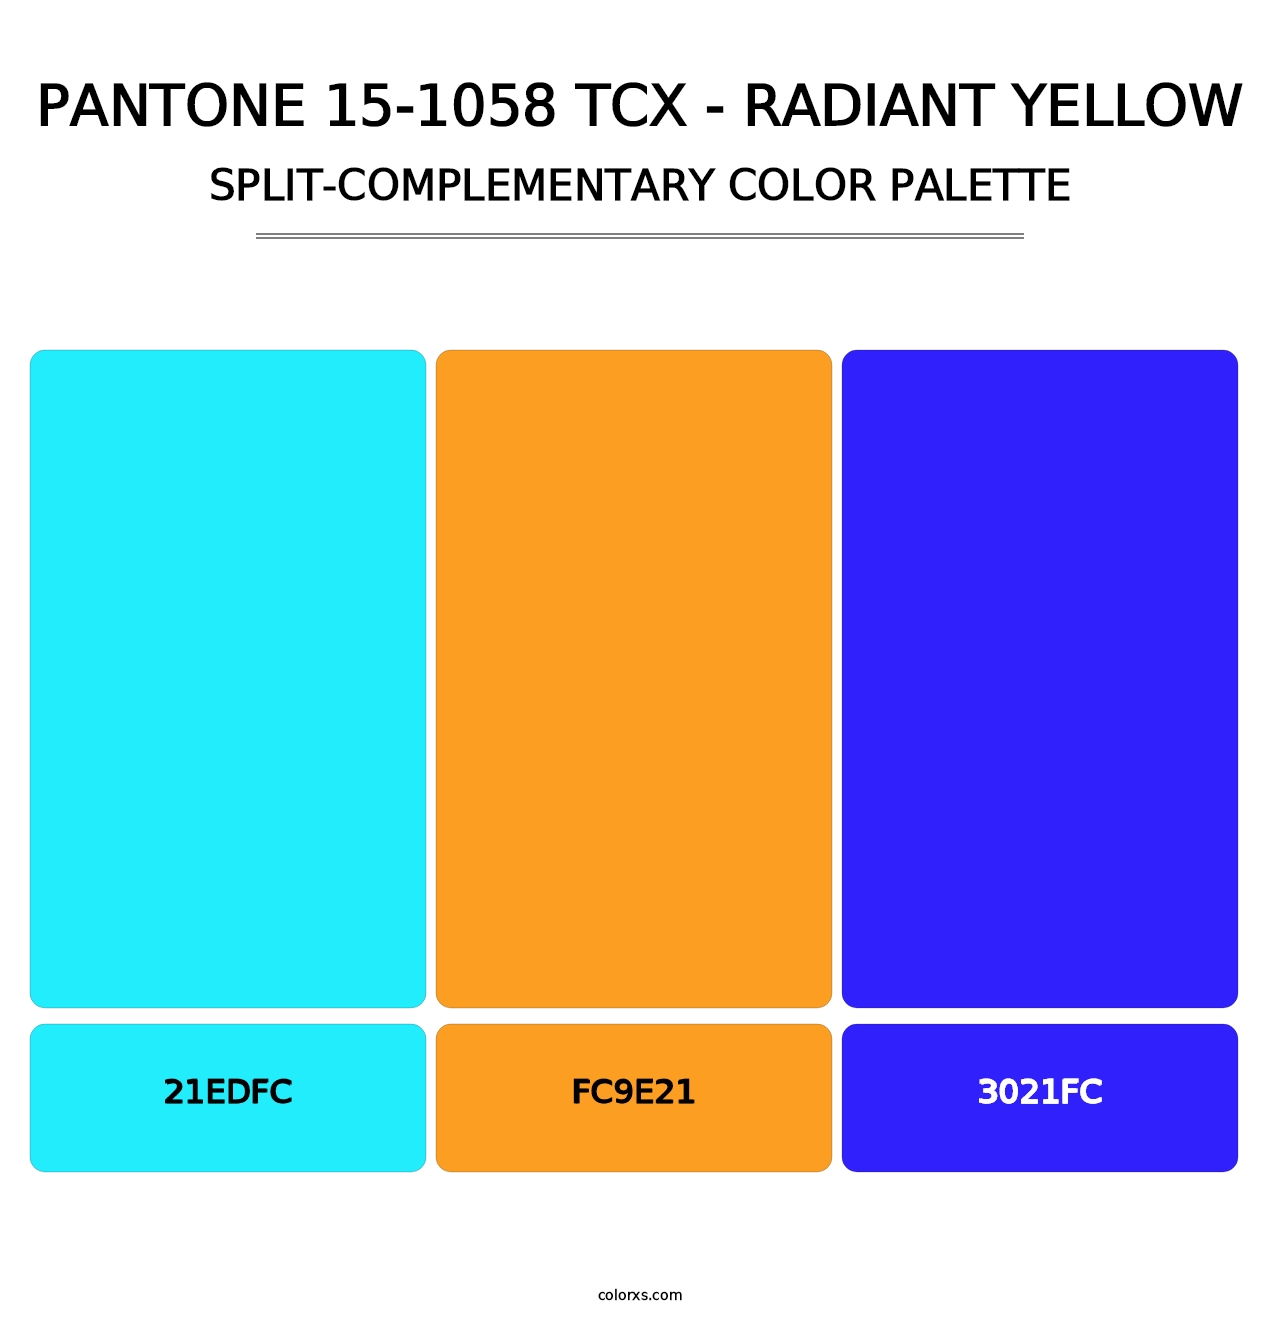 PANTONE 15-1058 TCX - Radiant Yellow - Split-Complementary Color Palette